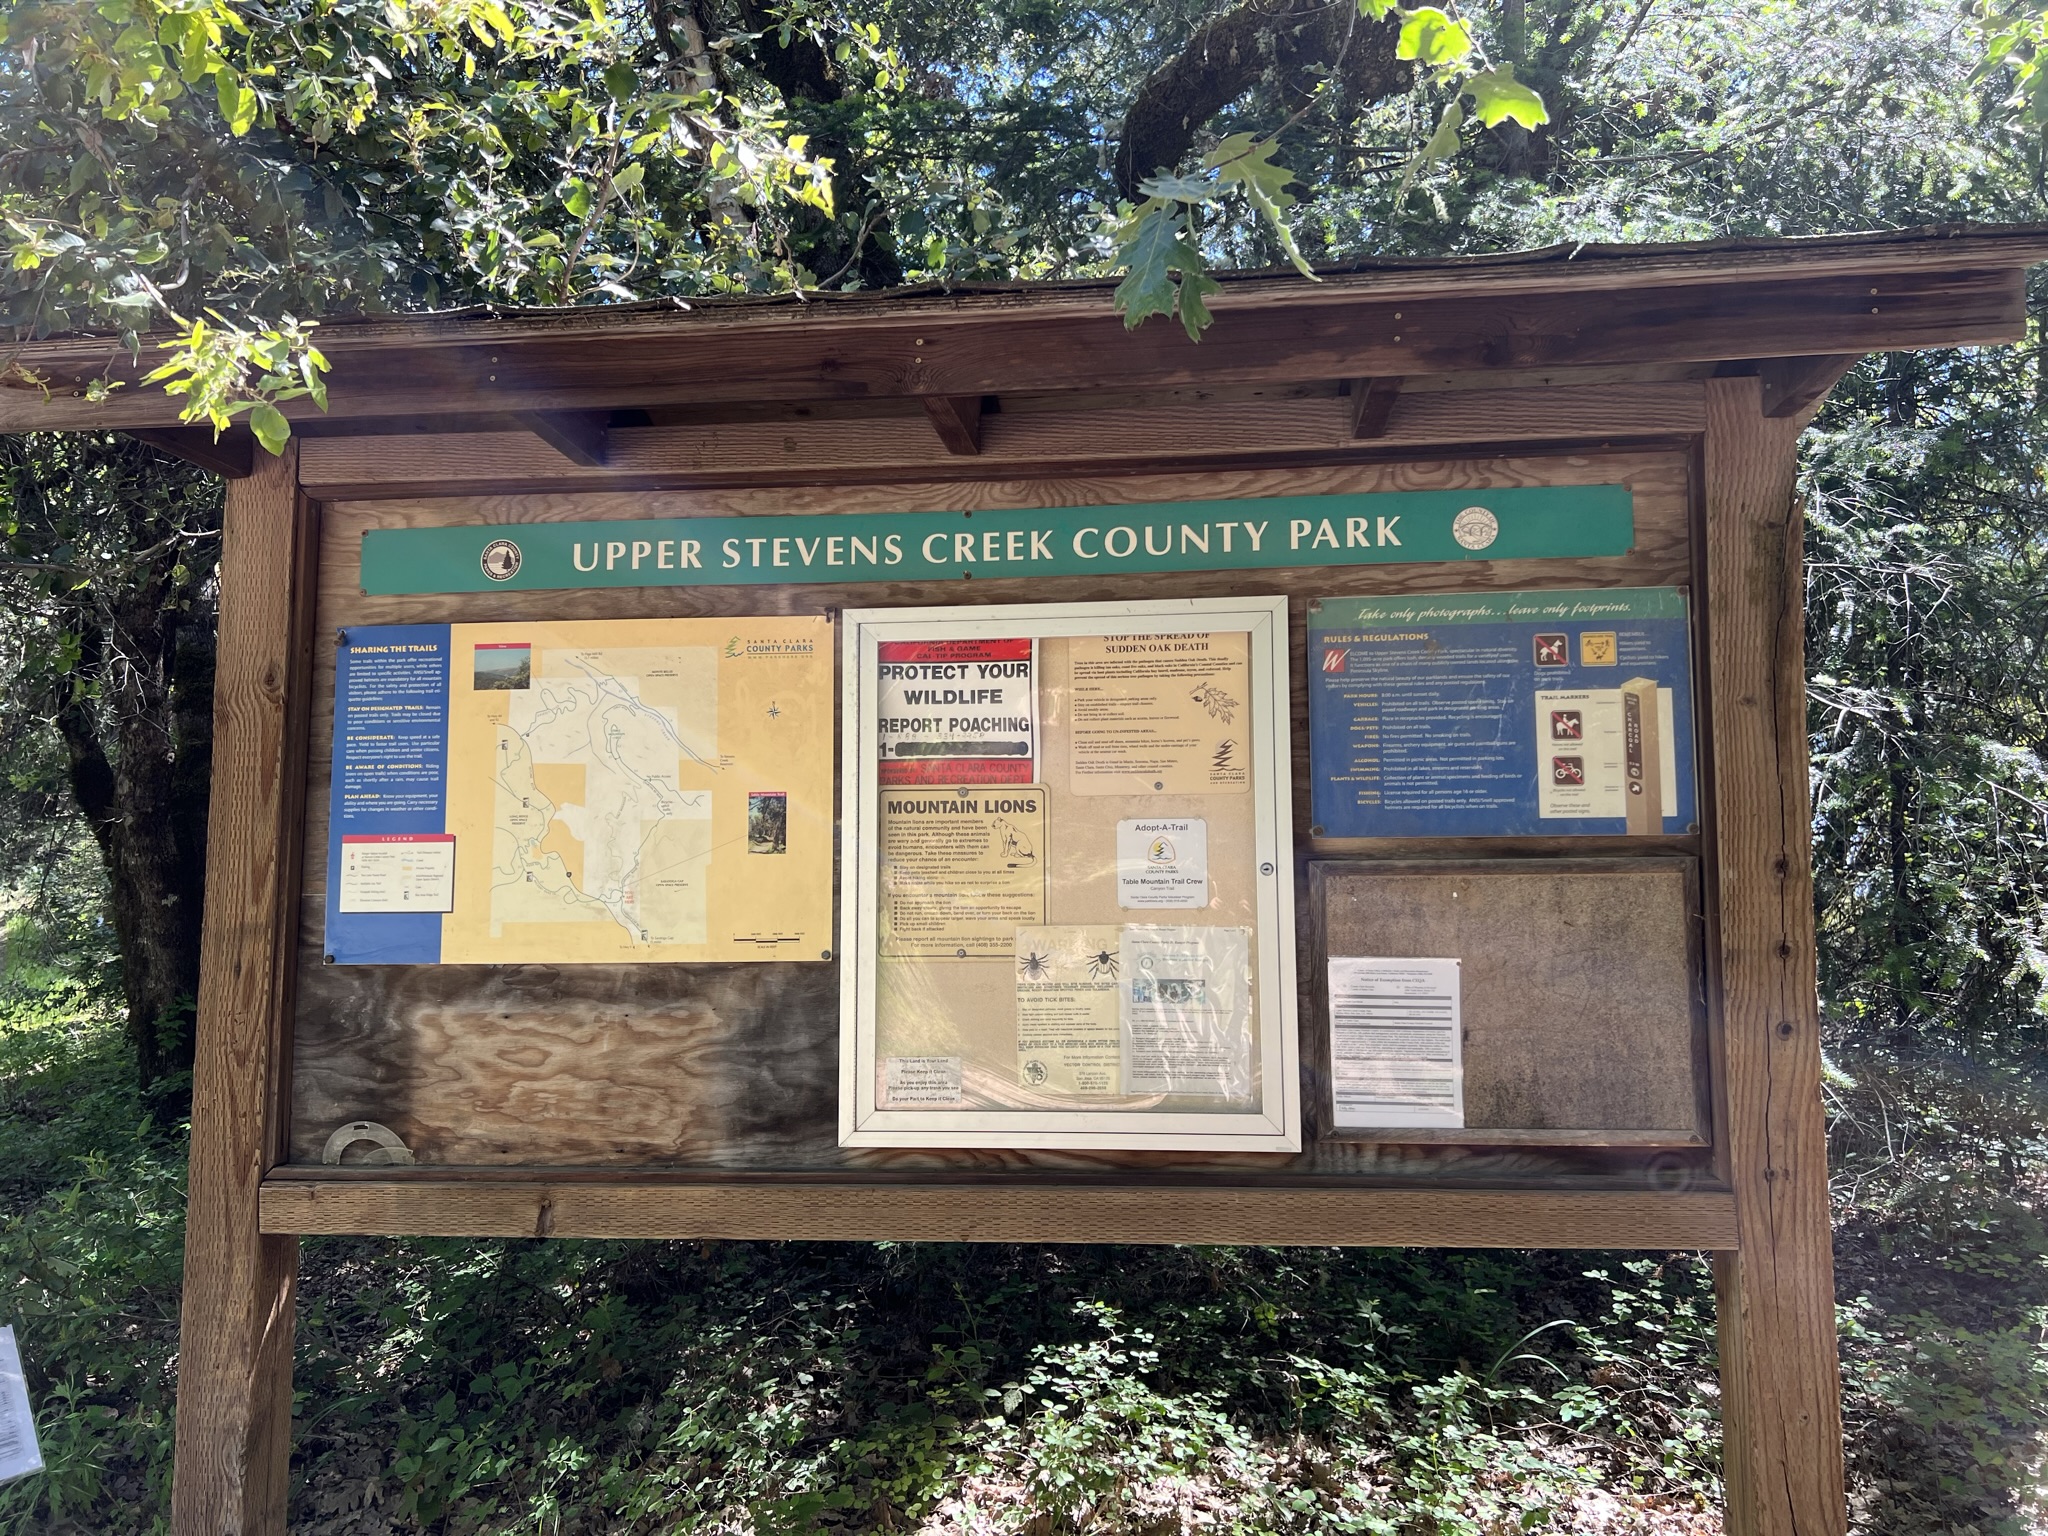 在 Saratoga Gap Open Space Preserve 走了一阵看到 Upper Stevens Creek County Park 的牌子